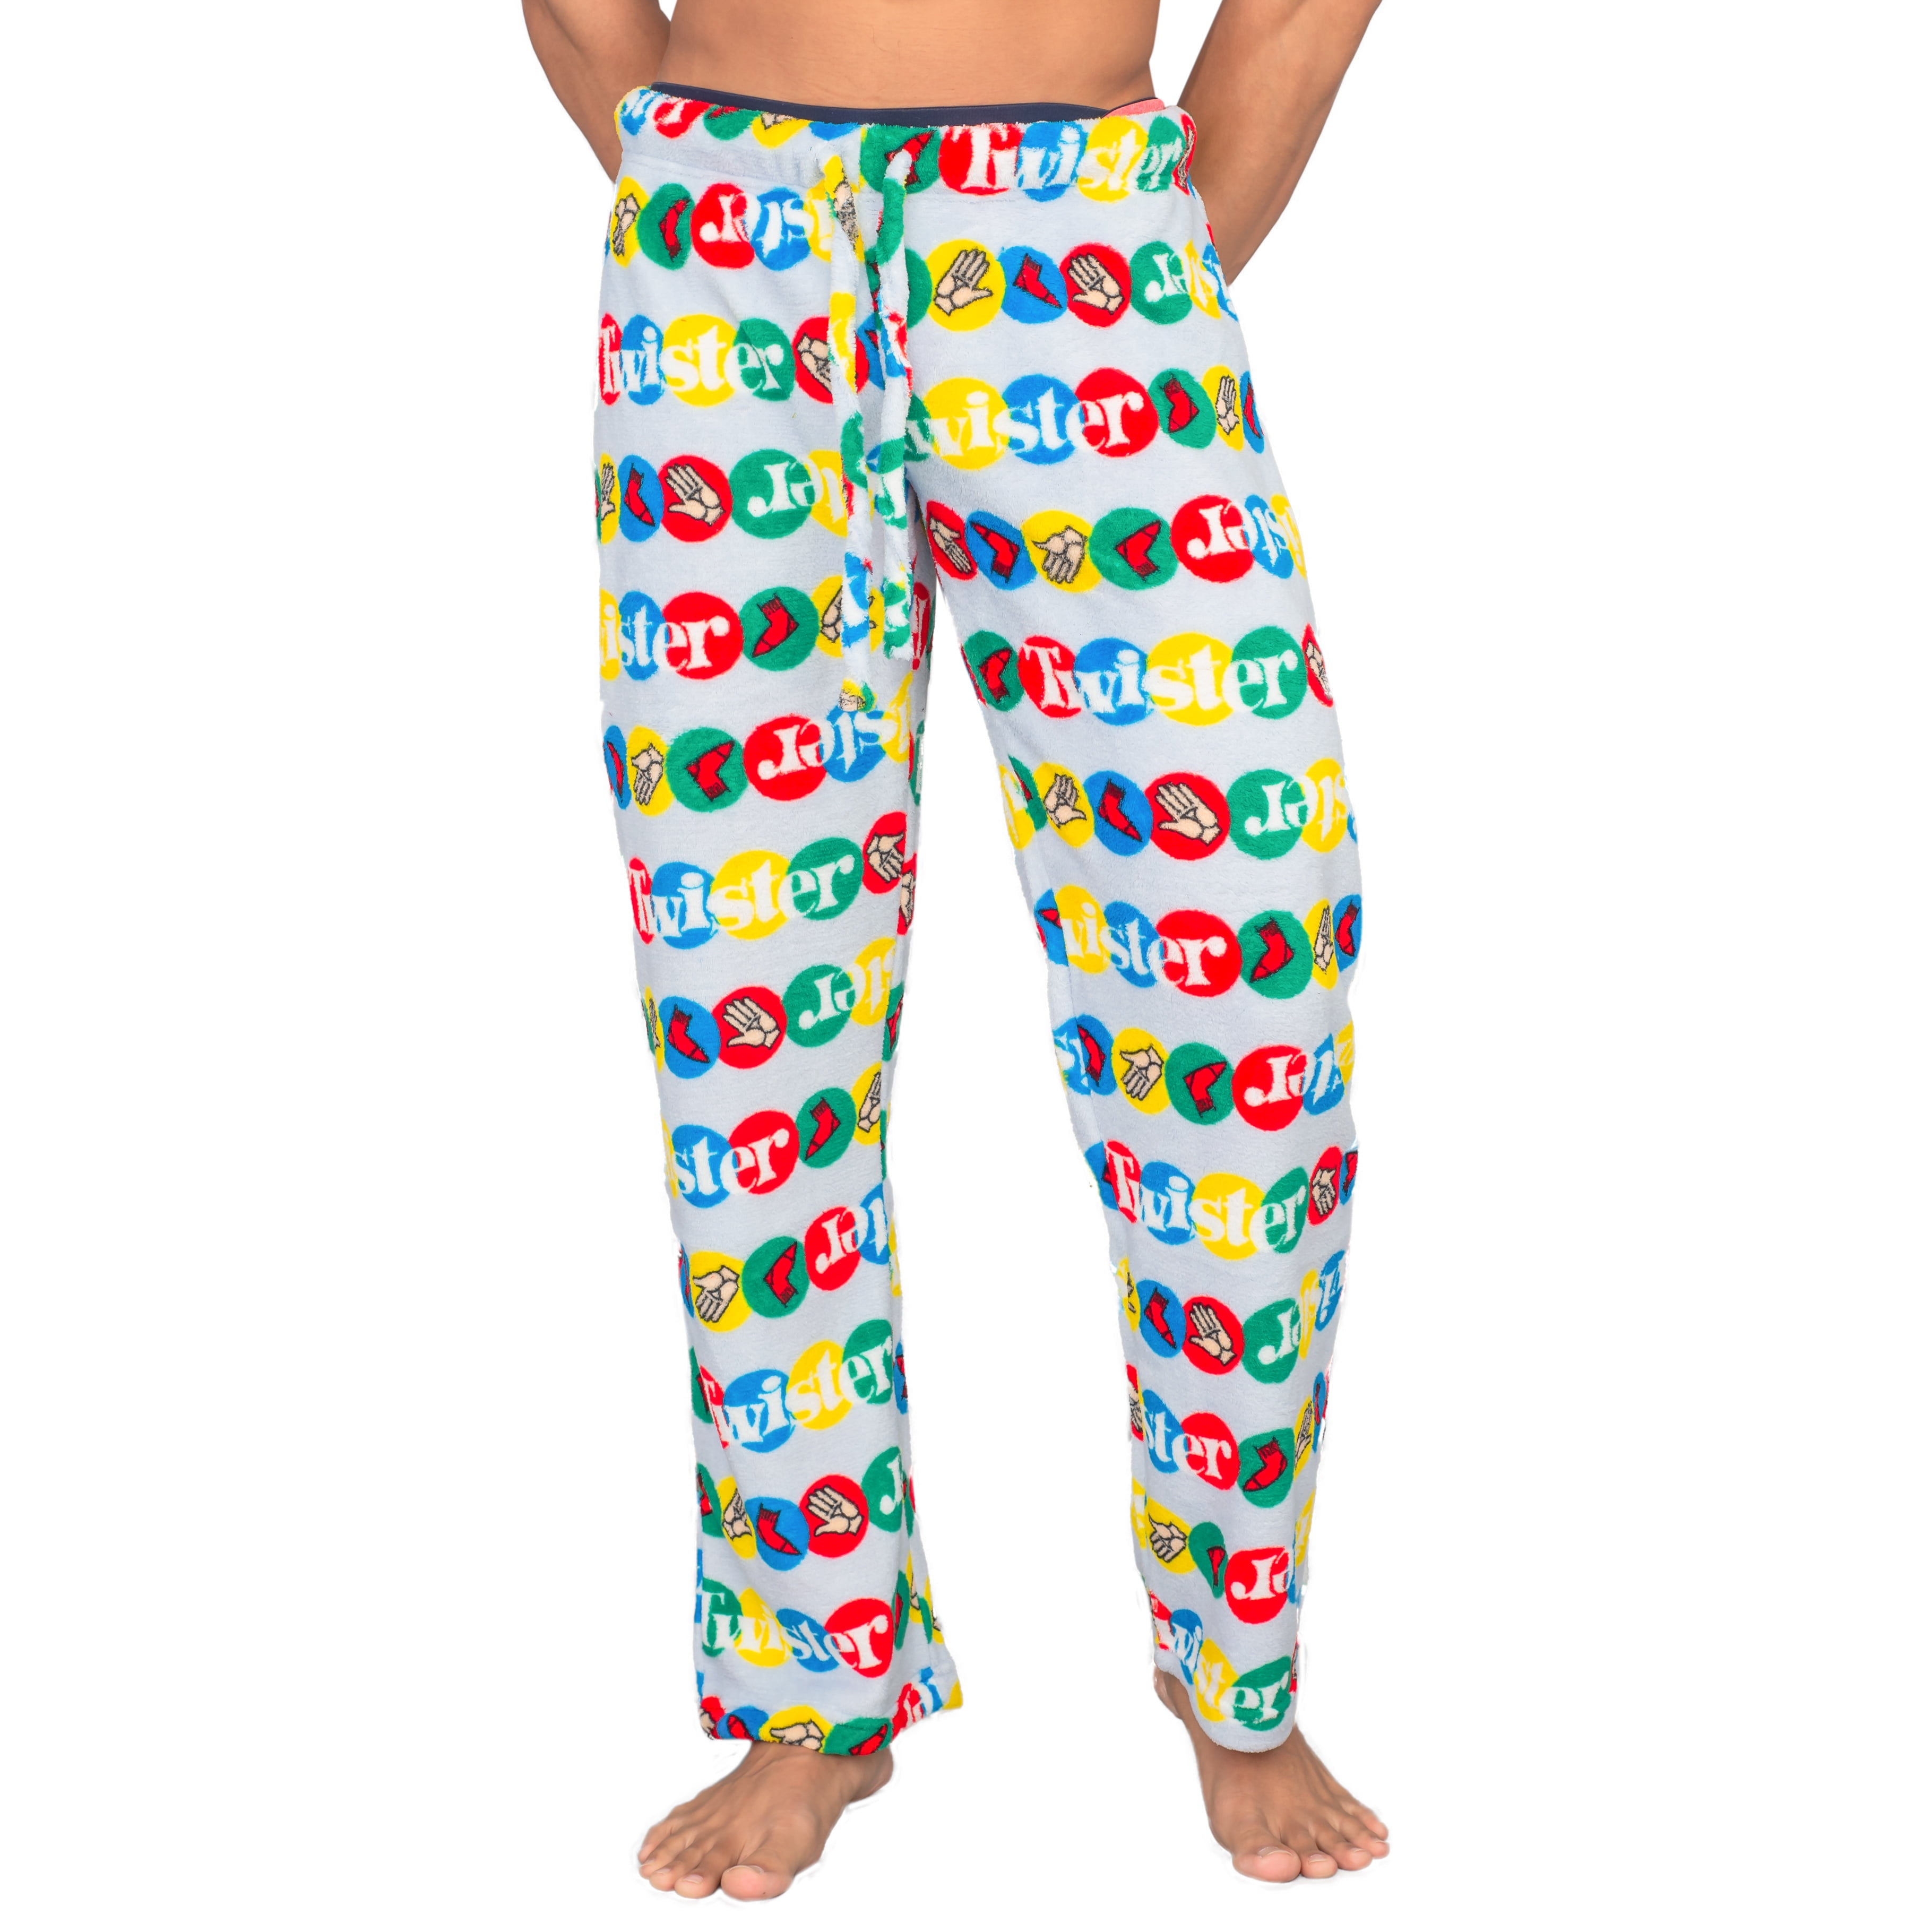 Lucky Brand Tie Dye Pajama Pants Loungewear Large L Lightweight - $10 -  From Regina